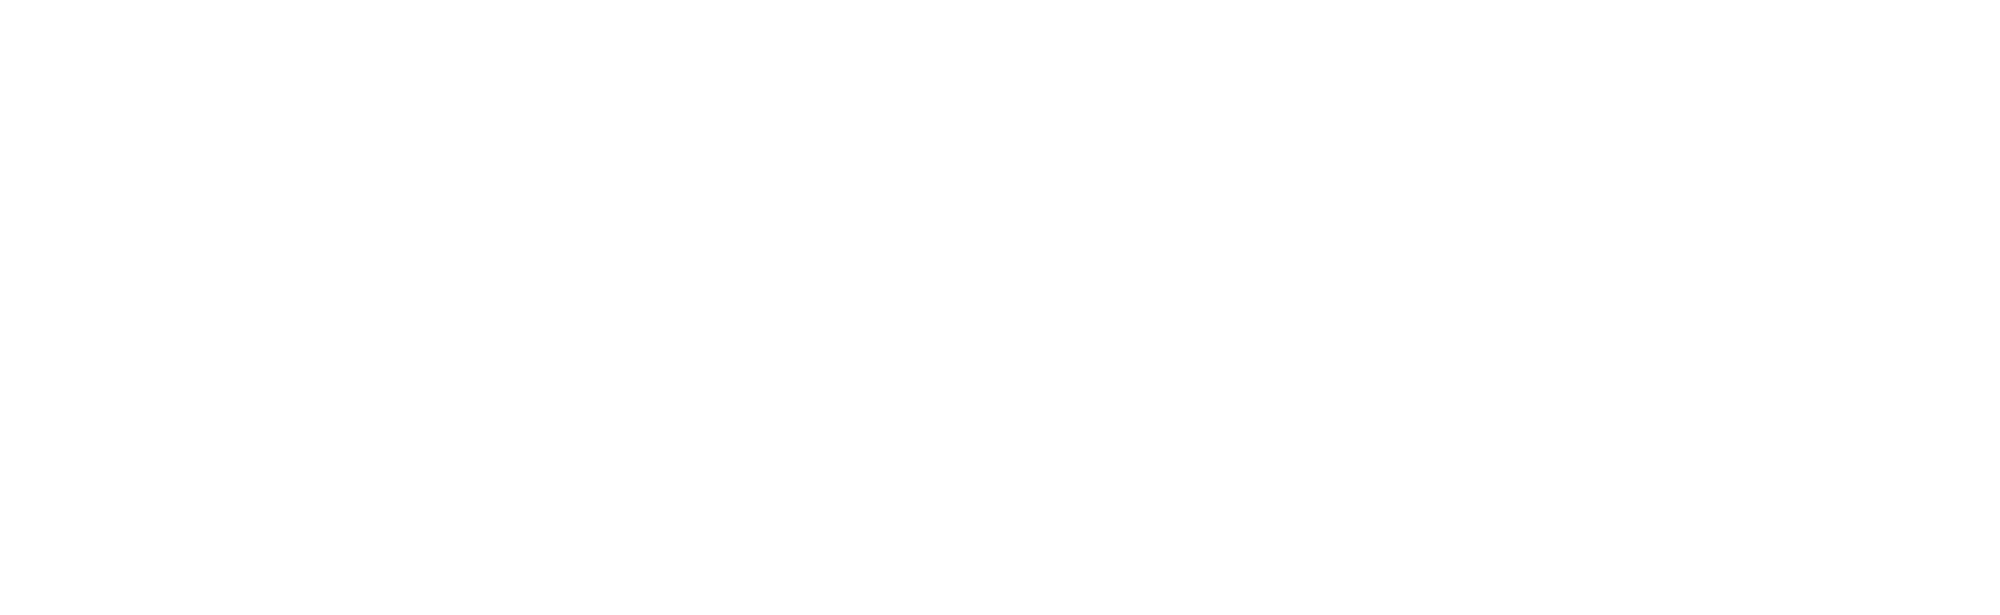 FloodSmart Logo-05